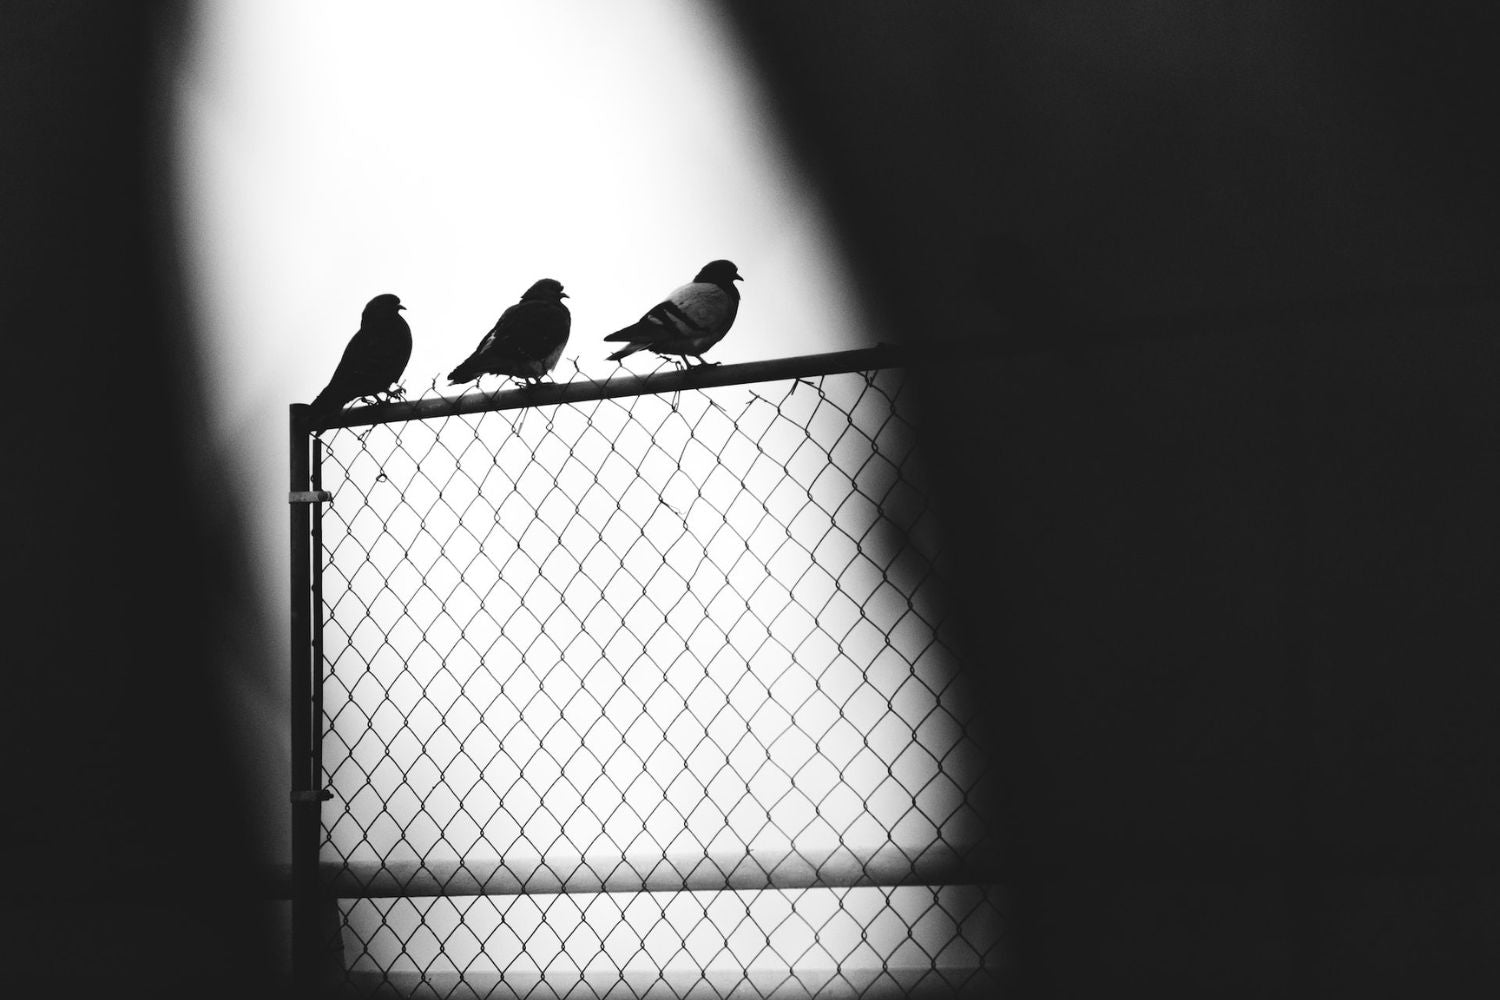 three birds on the iron net Photo by Nathan Dumlao on Unsplash